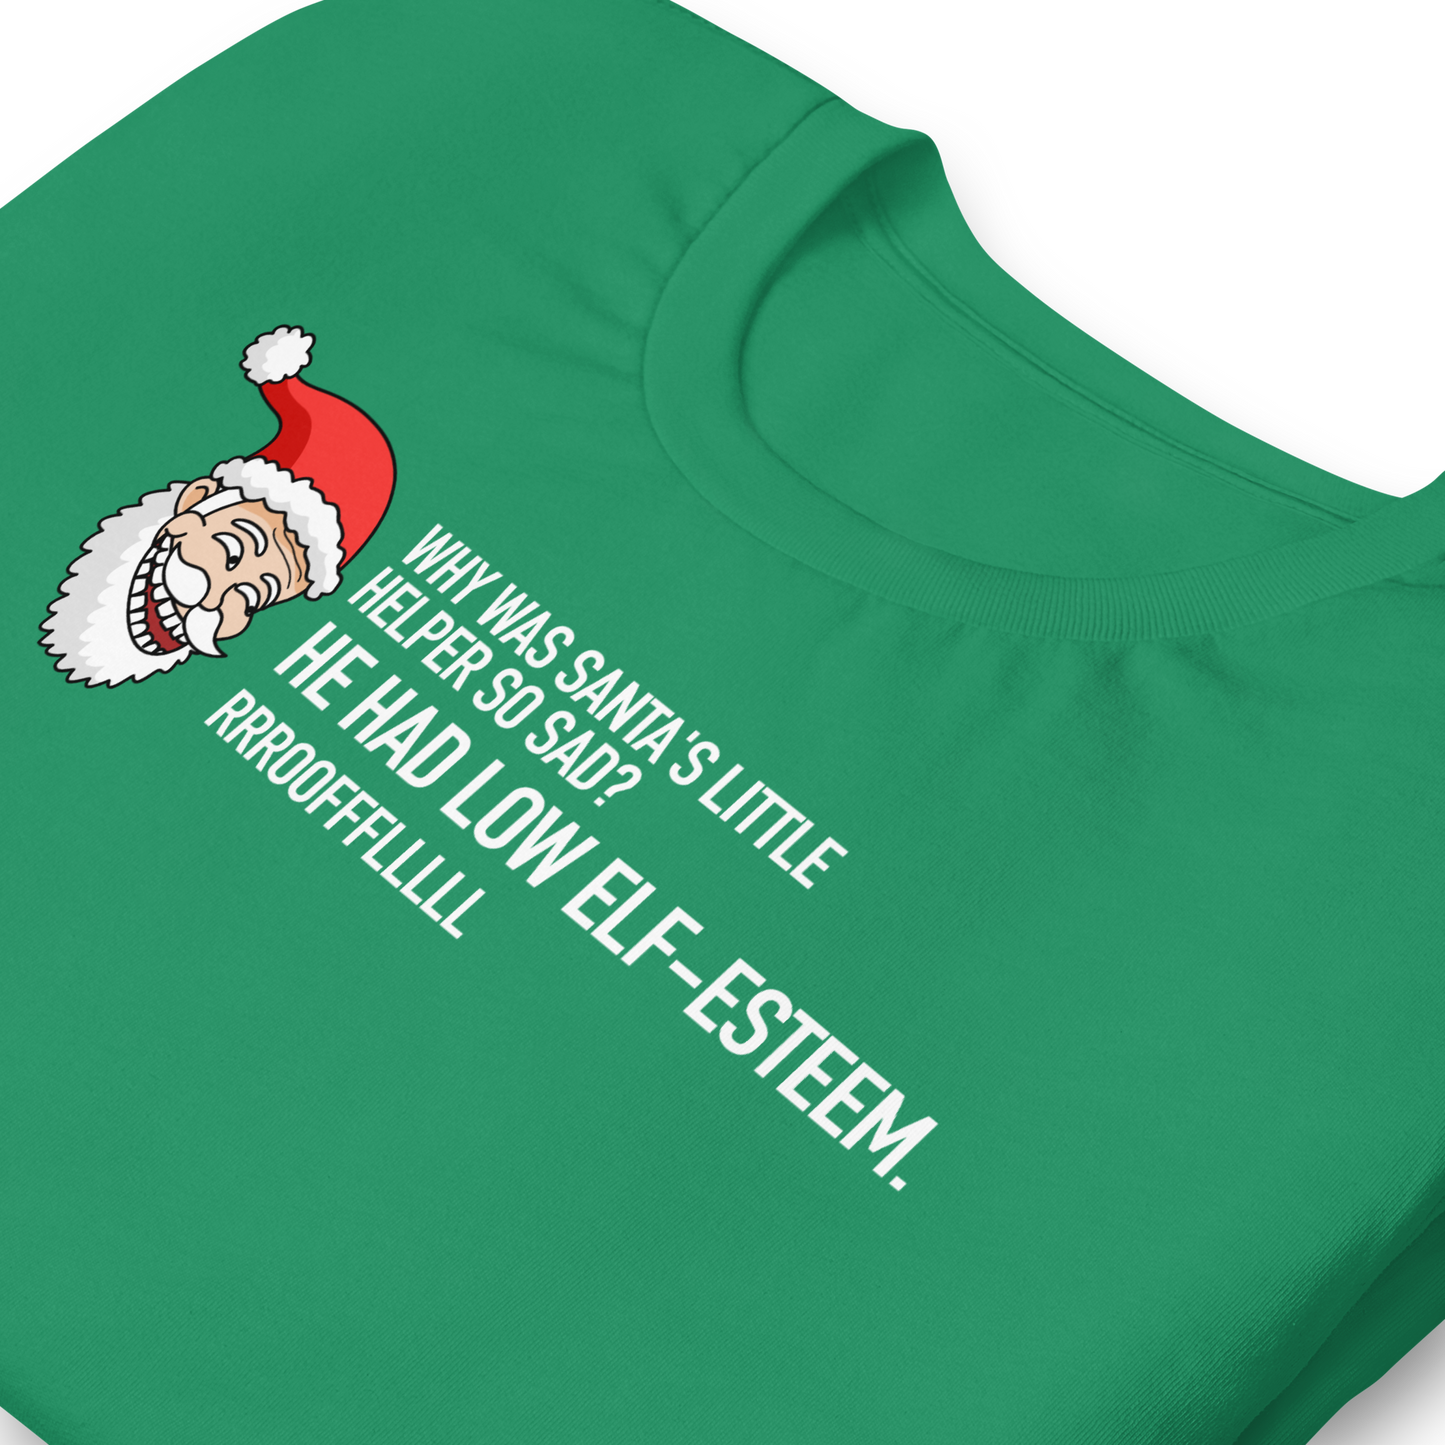 Unisex - CHRISTMAS - Dad Joke Santa - He Had Low Elf Esteem! - Funny t-shirt